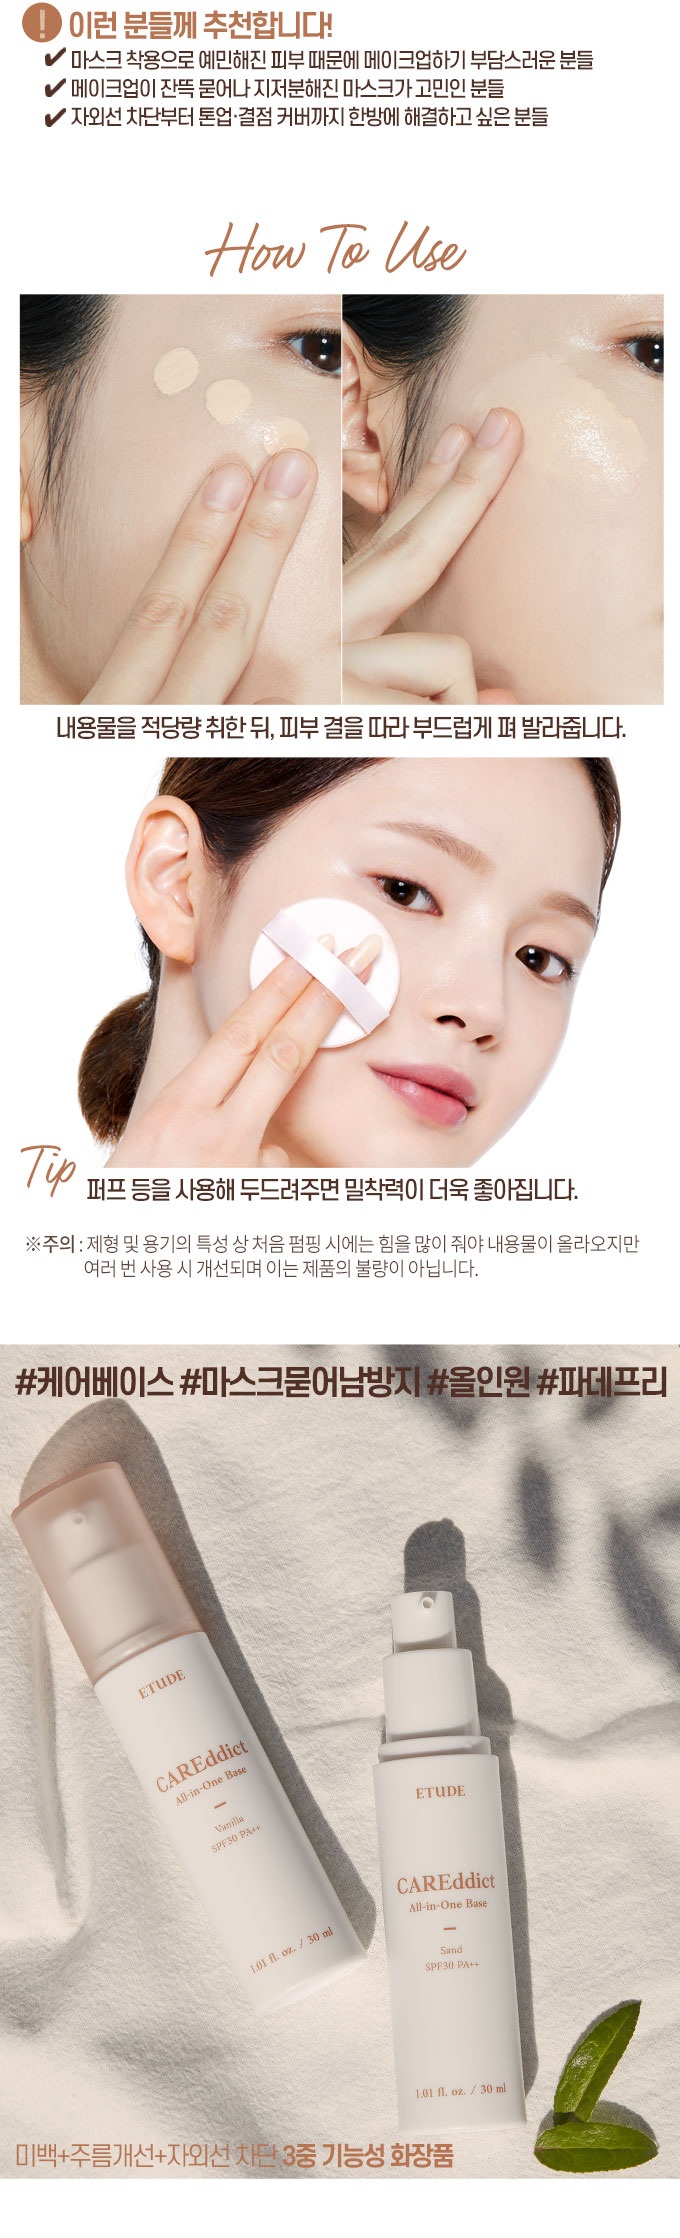 Etude House Careddict All in One Base korean skincare product online shop malaysia China taiwan4